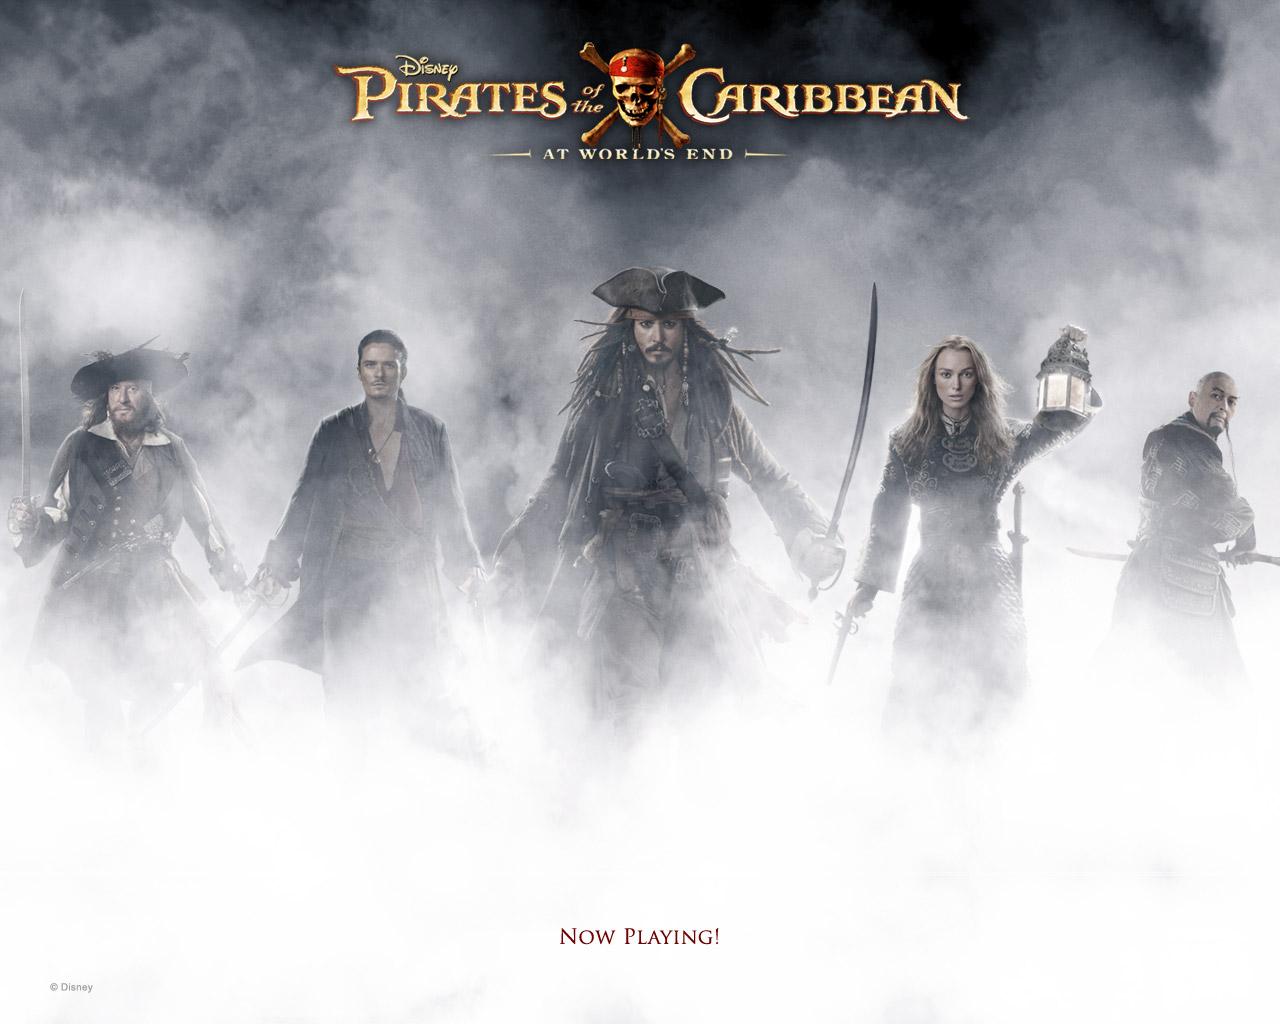 "Pirates of the Caribbean: At World's End" desktop wallpaper (1280 x 1024  pixels)